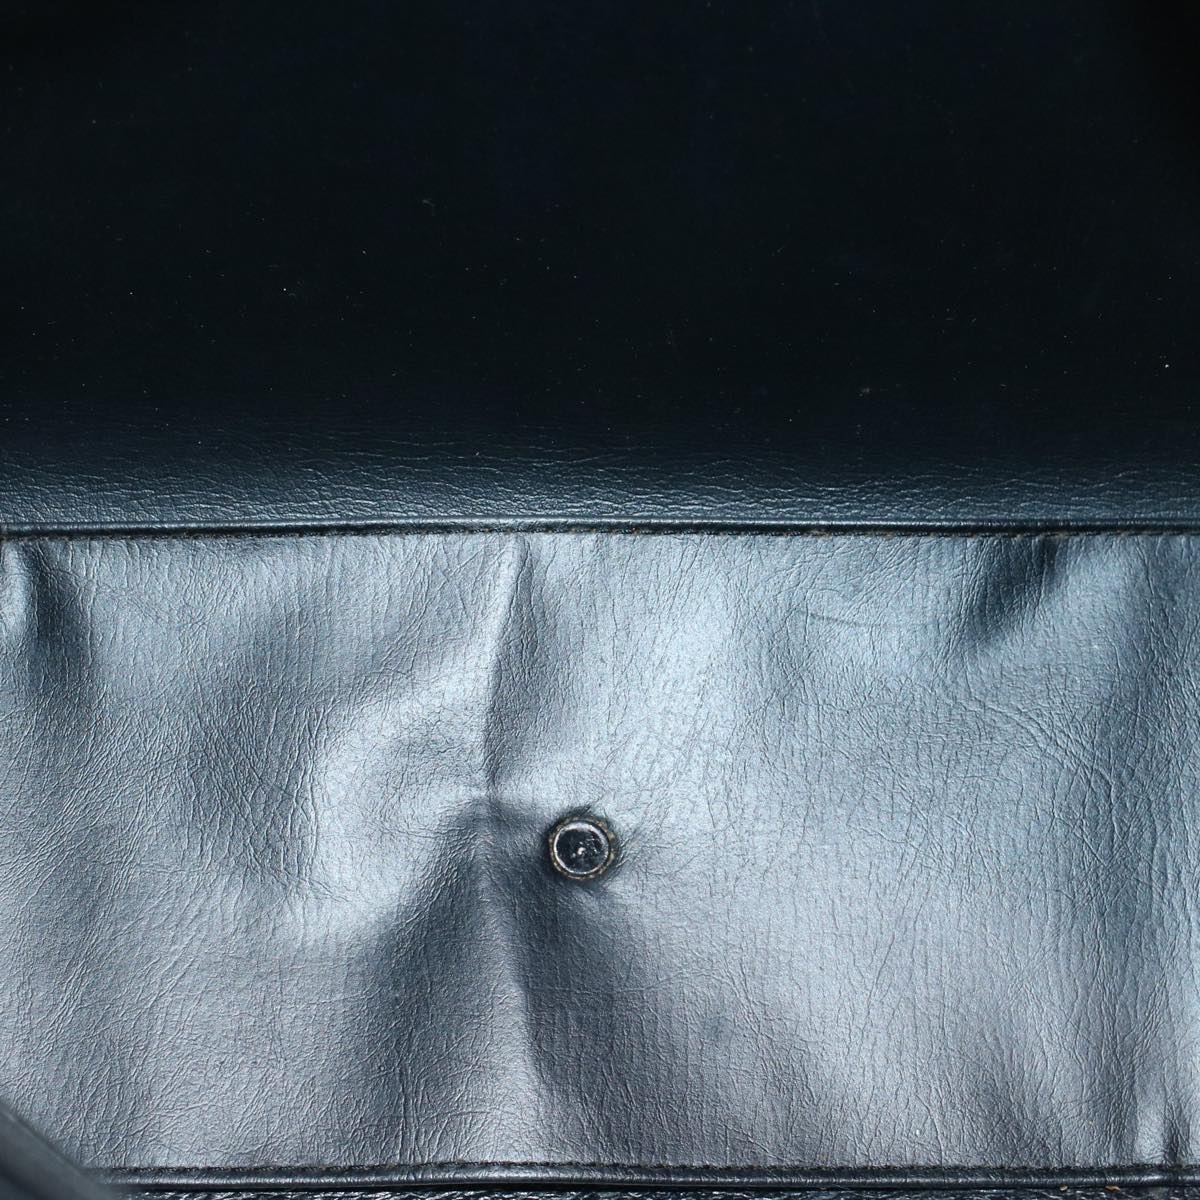 Burberrys Nova Check Boston Bag Canvas Leather Beige Black Auth 53393